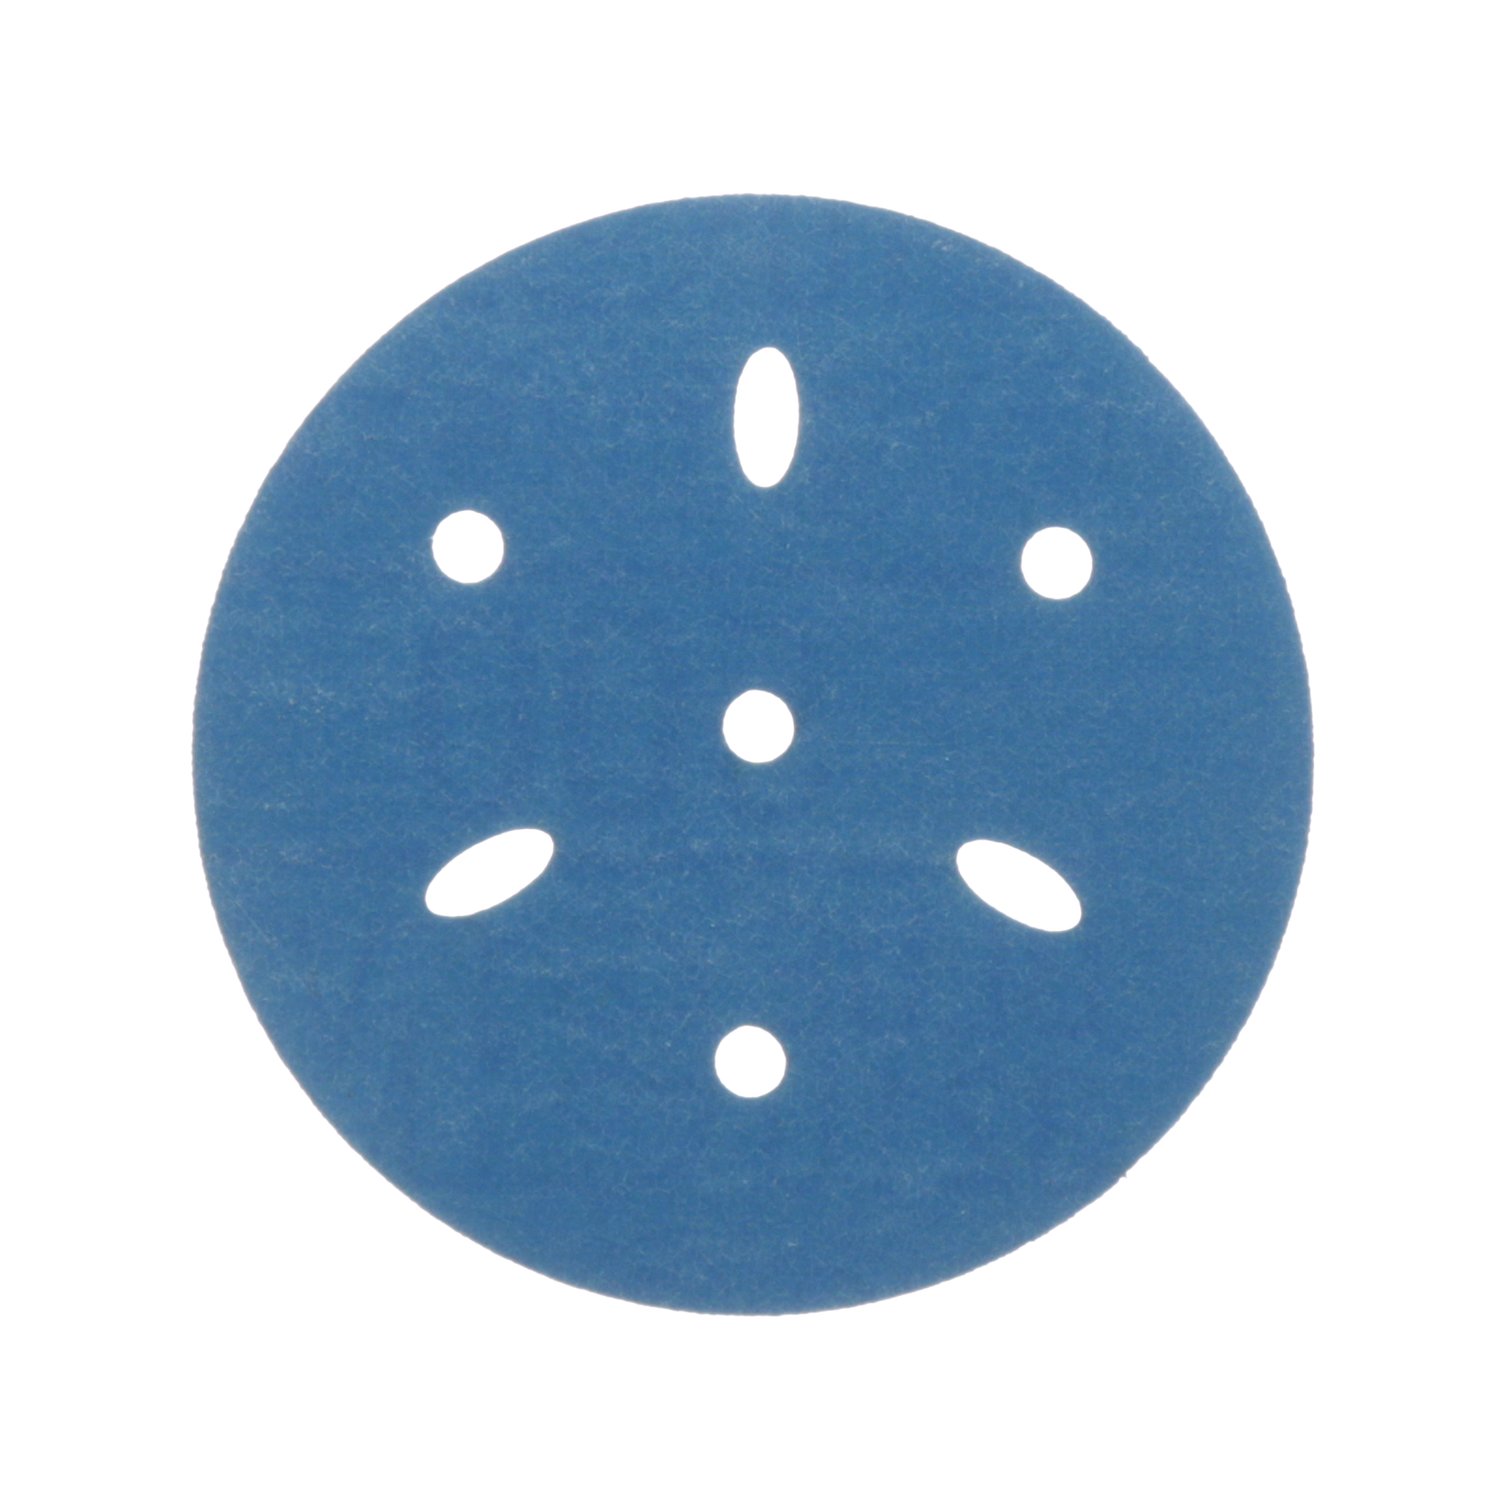 00051131361522 | 3M Hookit Blue Abrasive Disc 321U Multi-hole